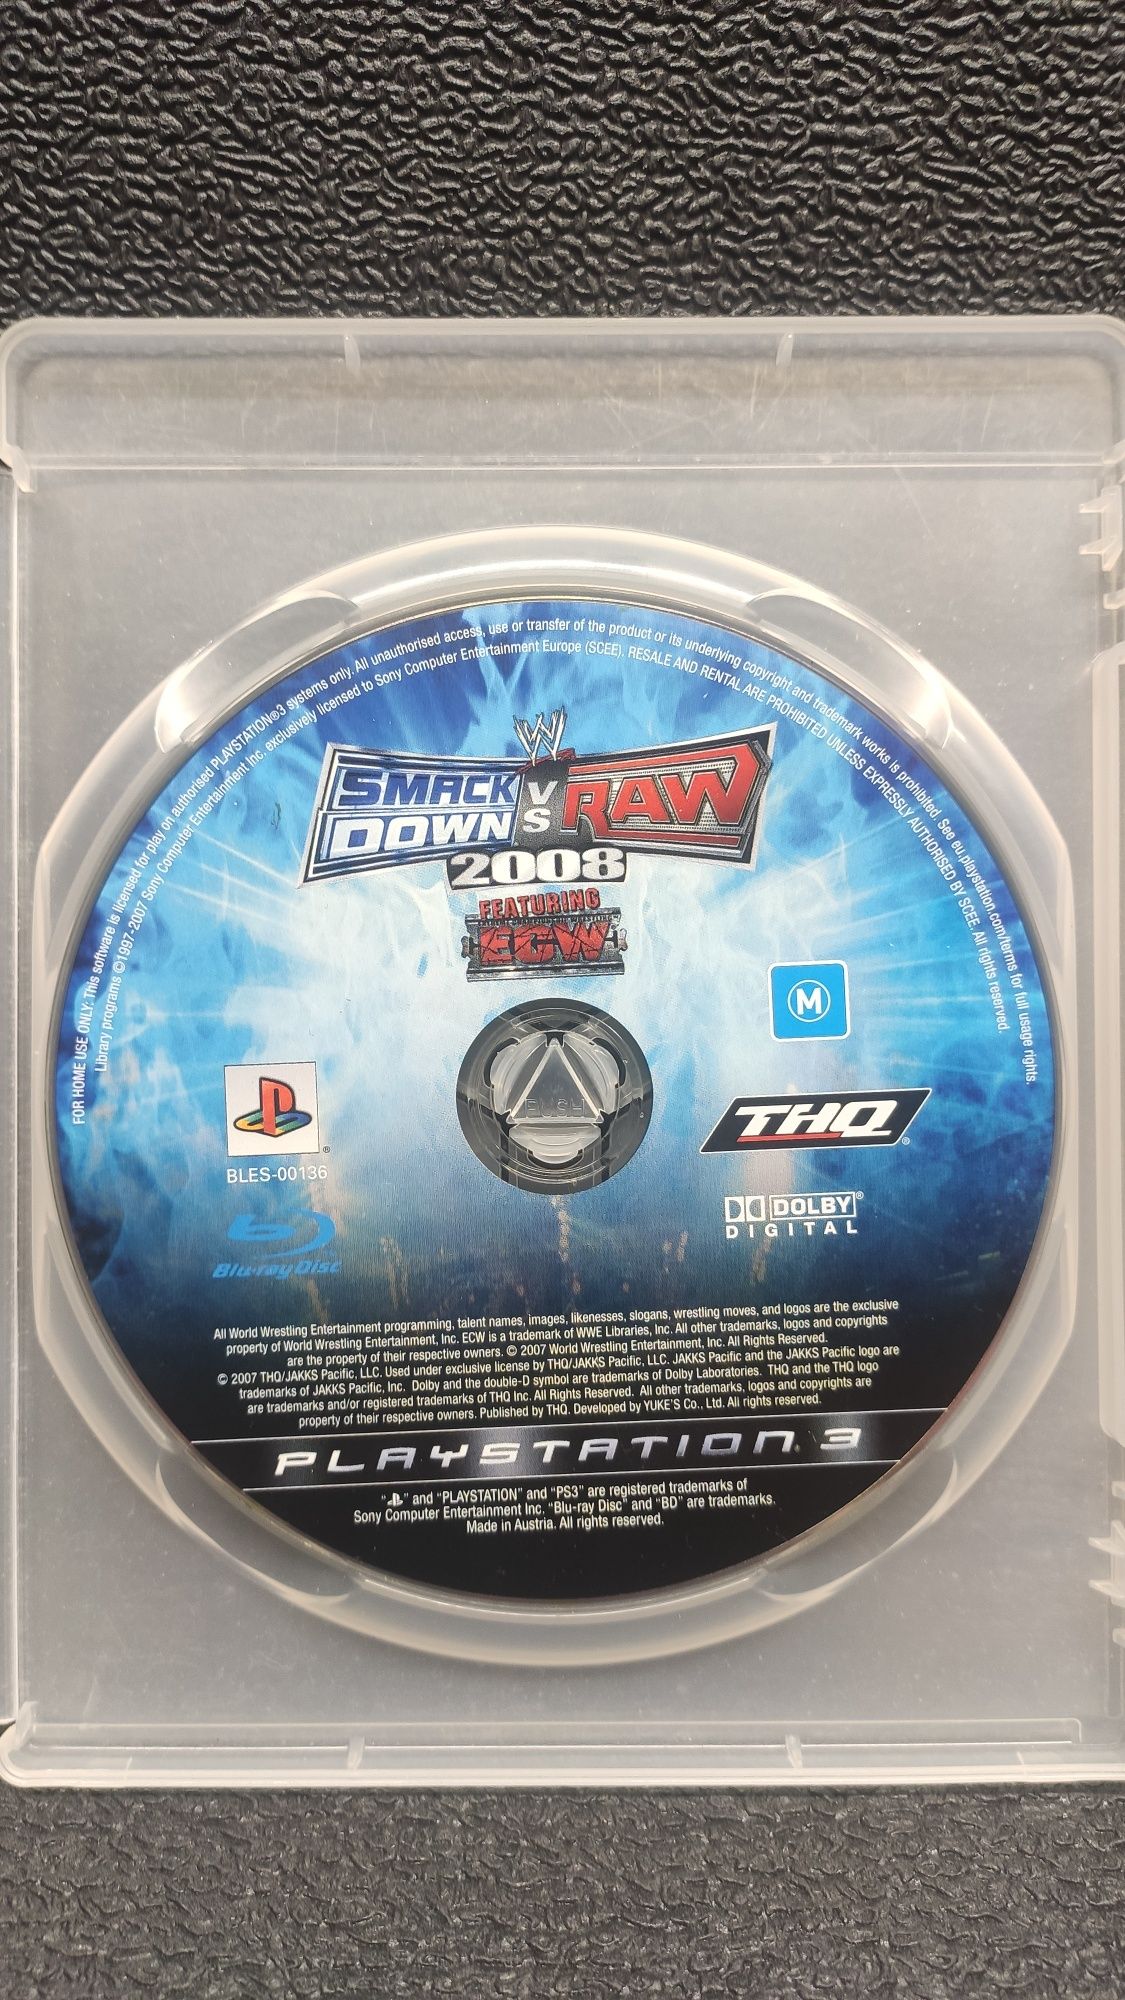 Smack down vs raw 2008 PlayStation 3/ PS3